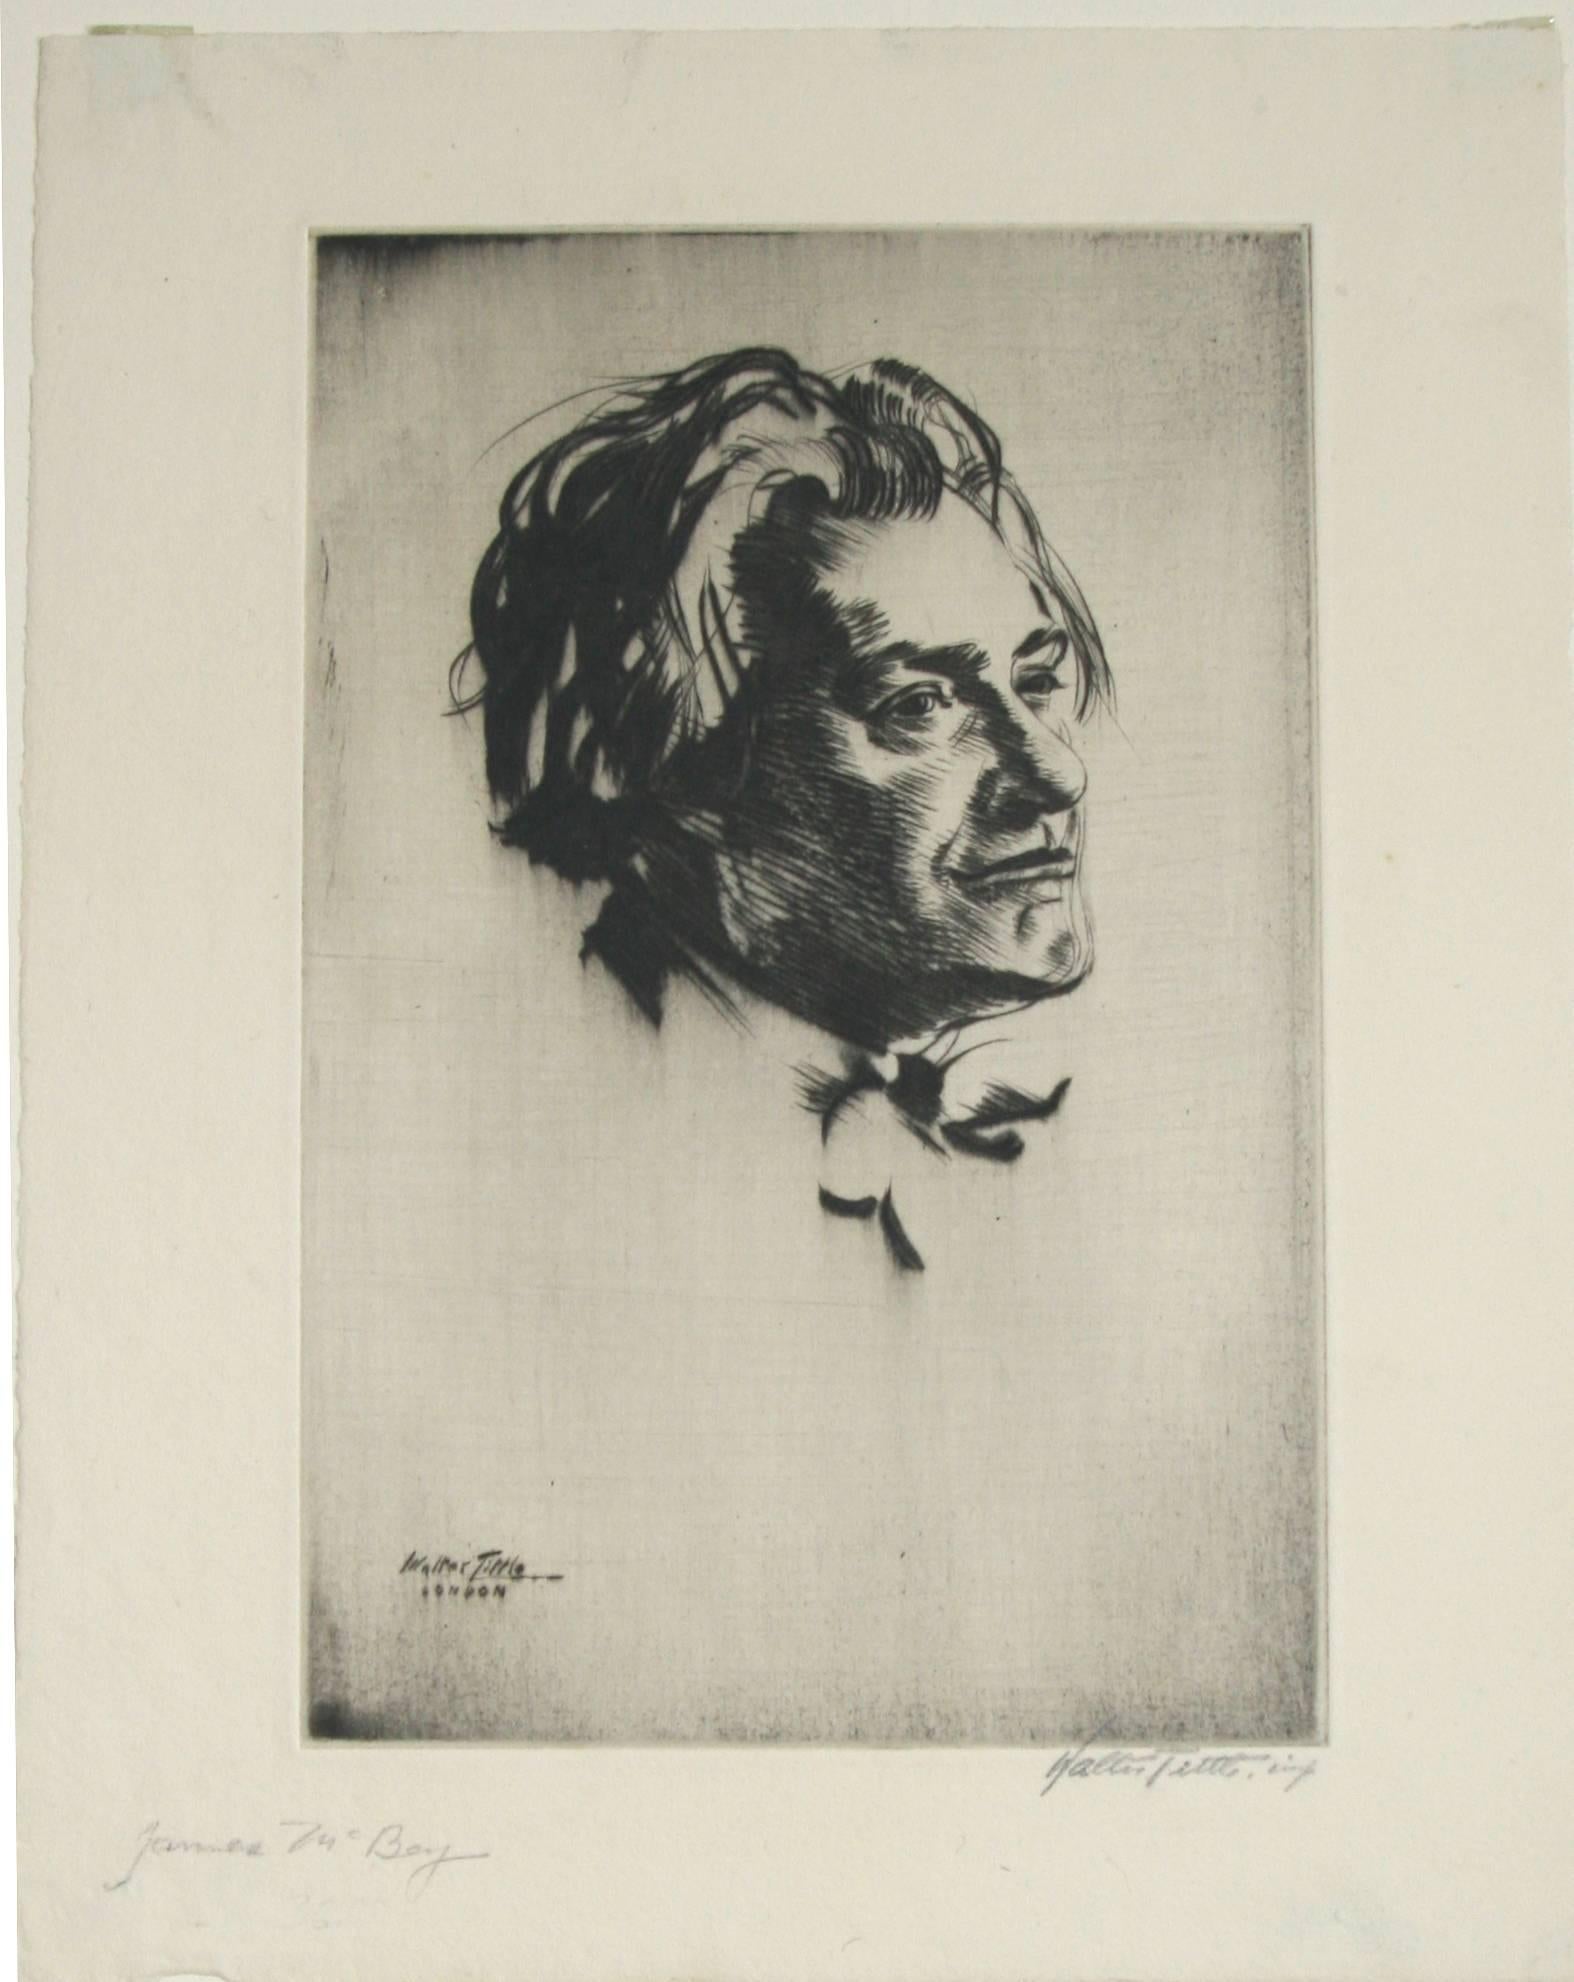 Portrait of James McBey. - Print by Walter Tittle